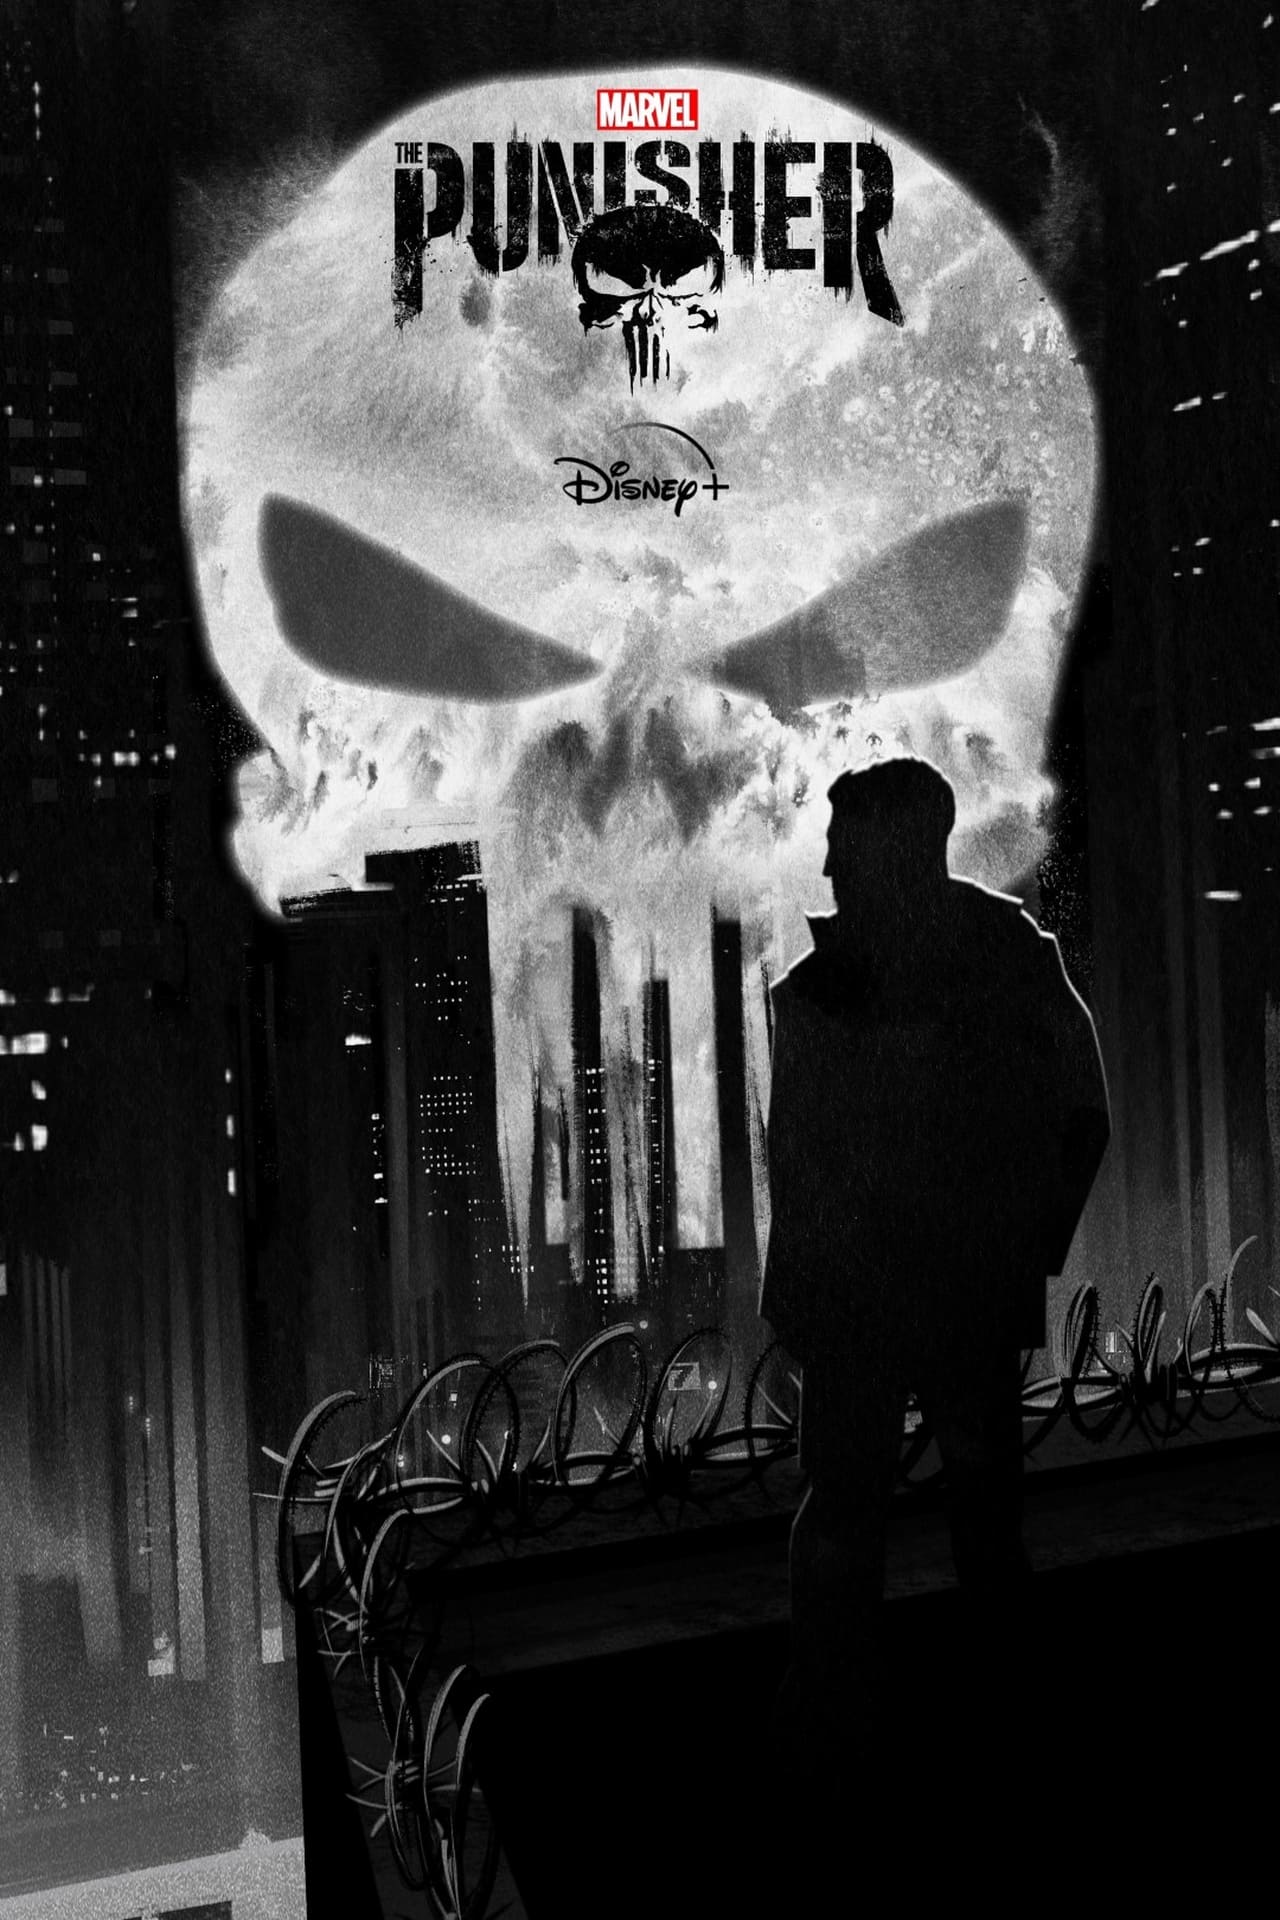 The Punisher (2019) S2 EP01&EP13 256Kbps 23.976Fps 48Khz 5.1Ch Disney+ DD+ E-AC3 Turkish Audio TAC